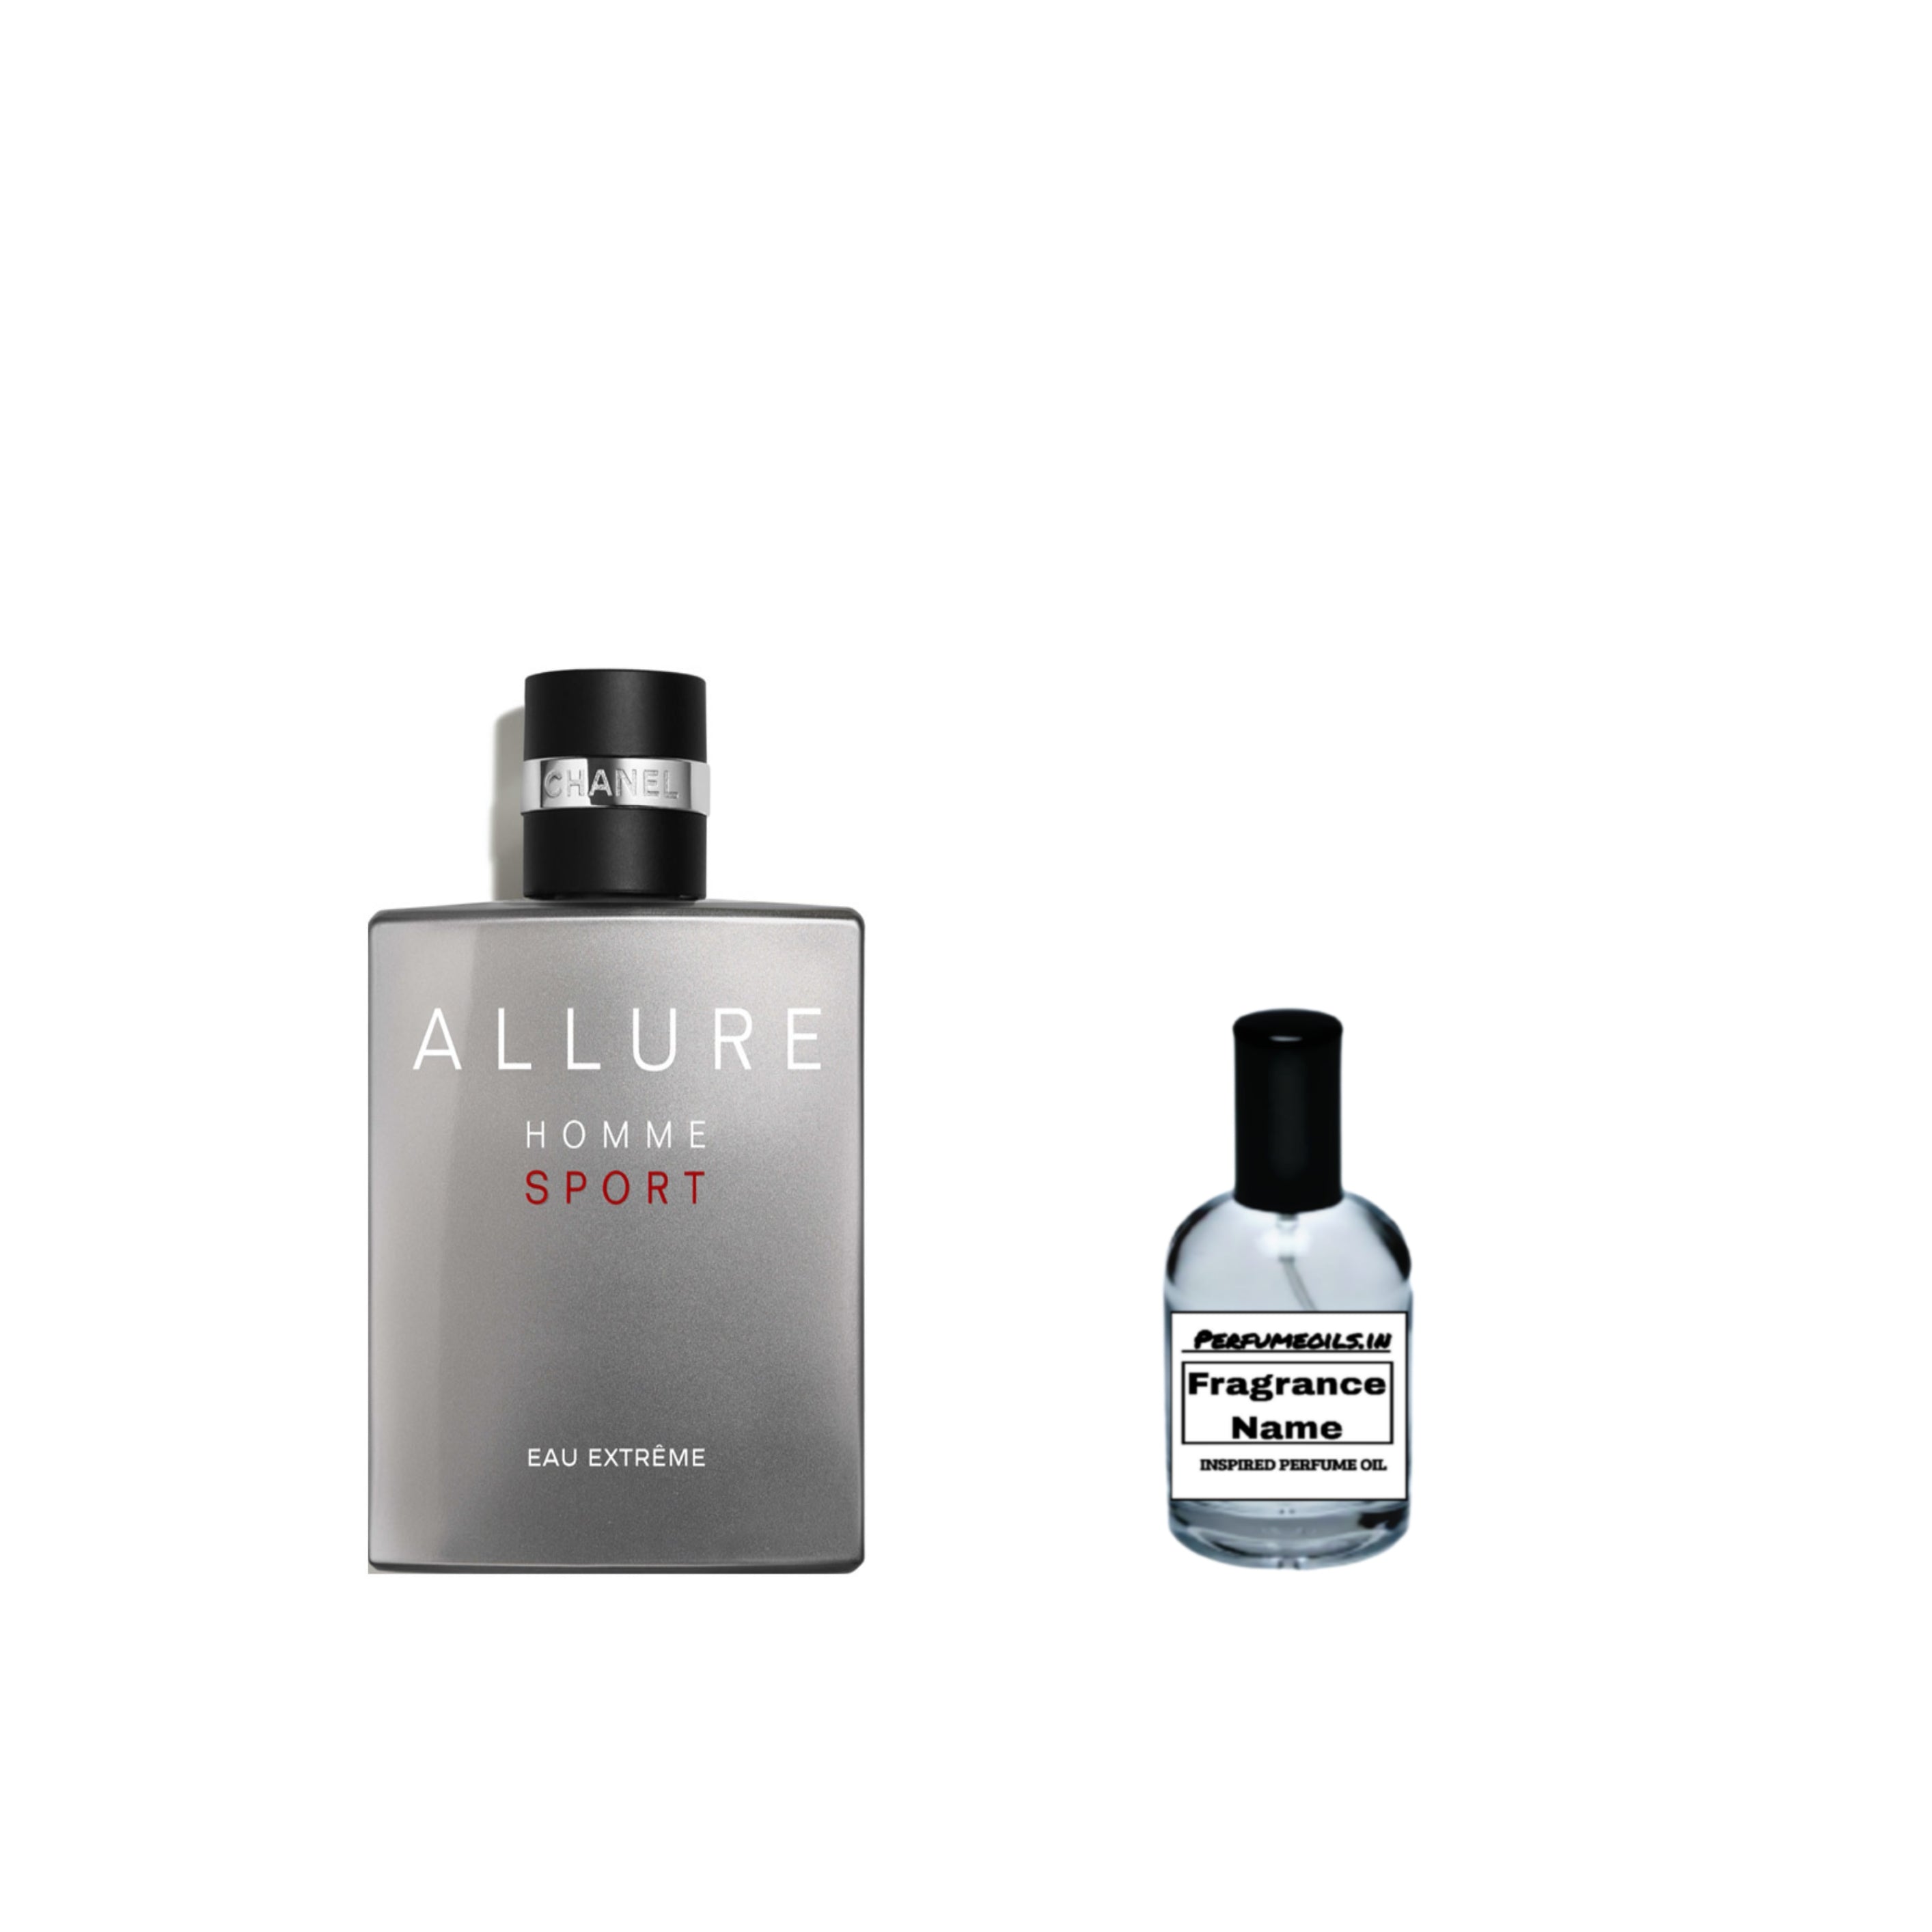 Allure Homme Sport Extreme Chanel for men inspired Perfume Oil